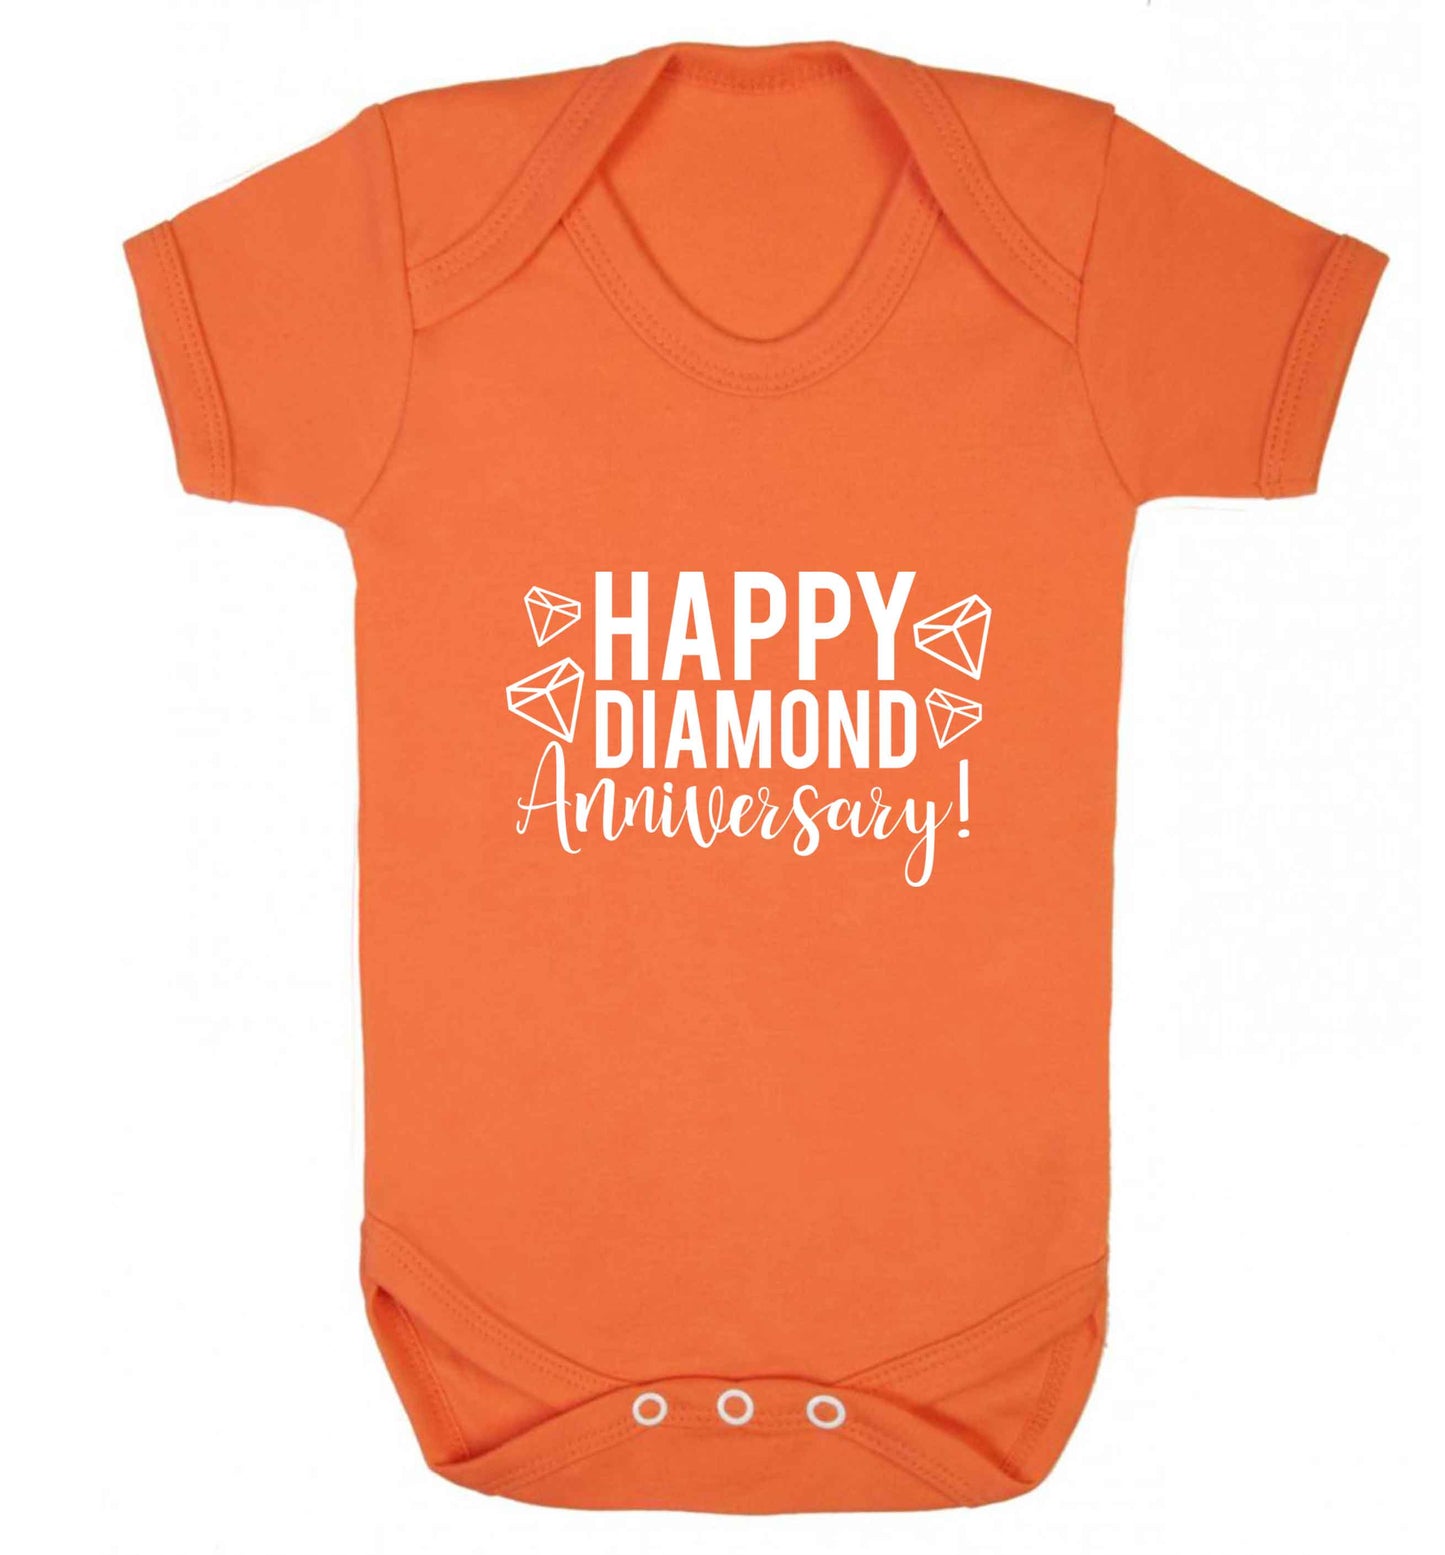 Happy diamond anniversary! baby vest orange 18-24 months